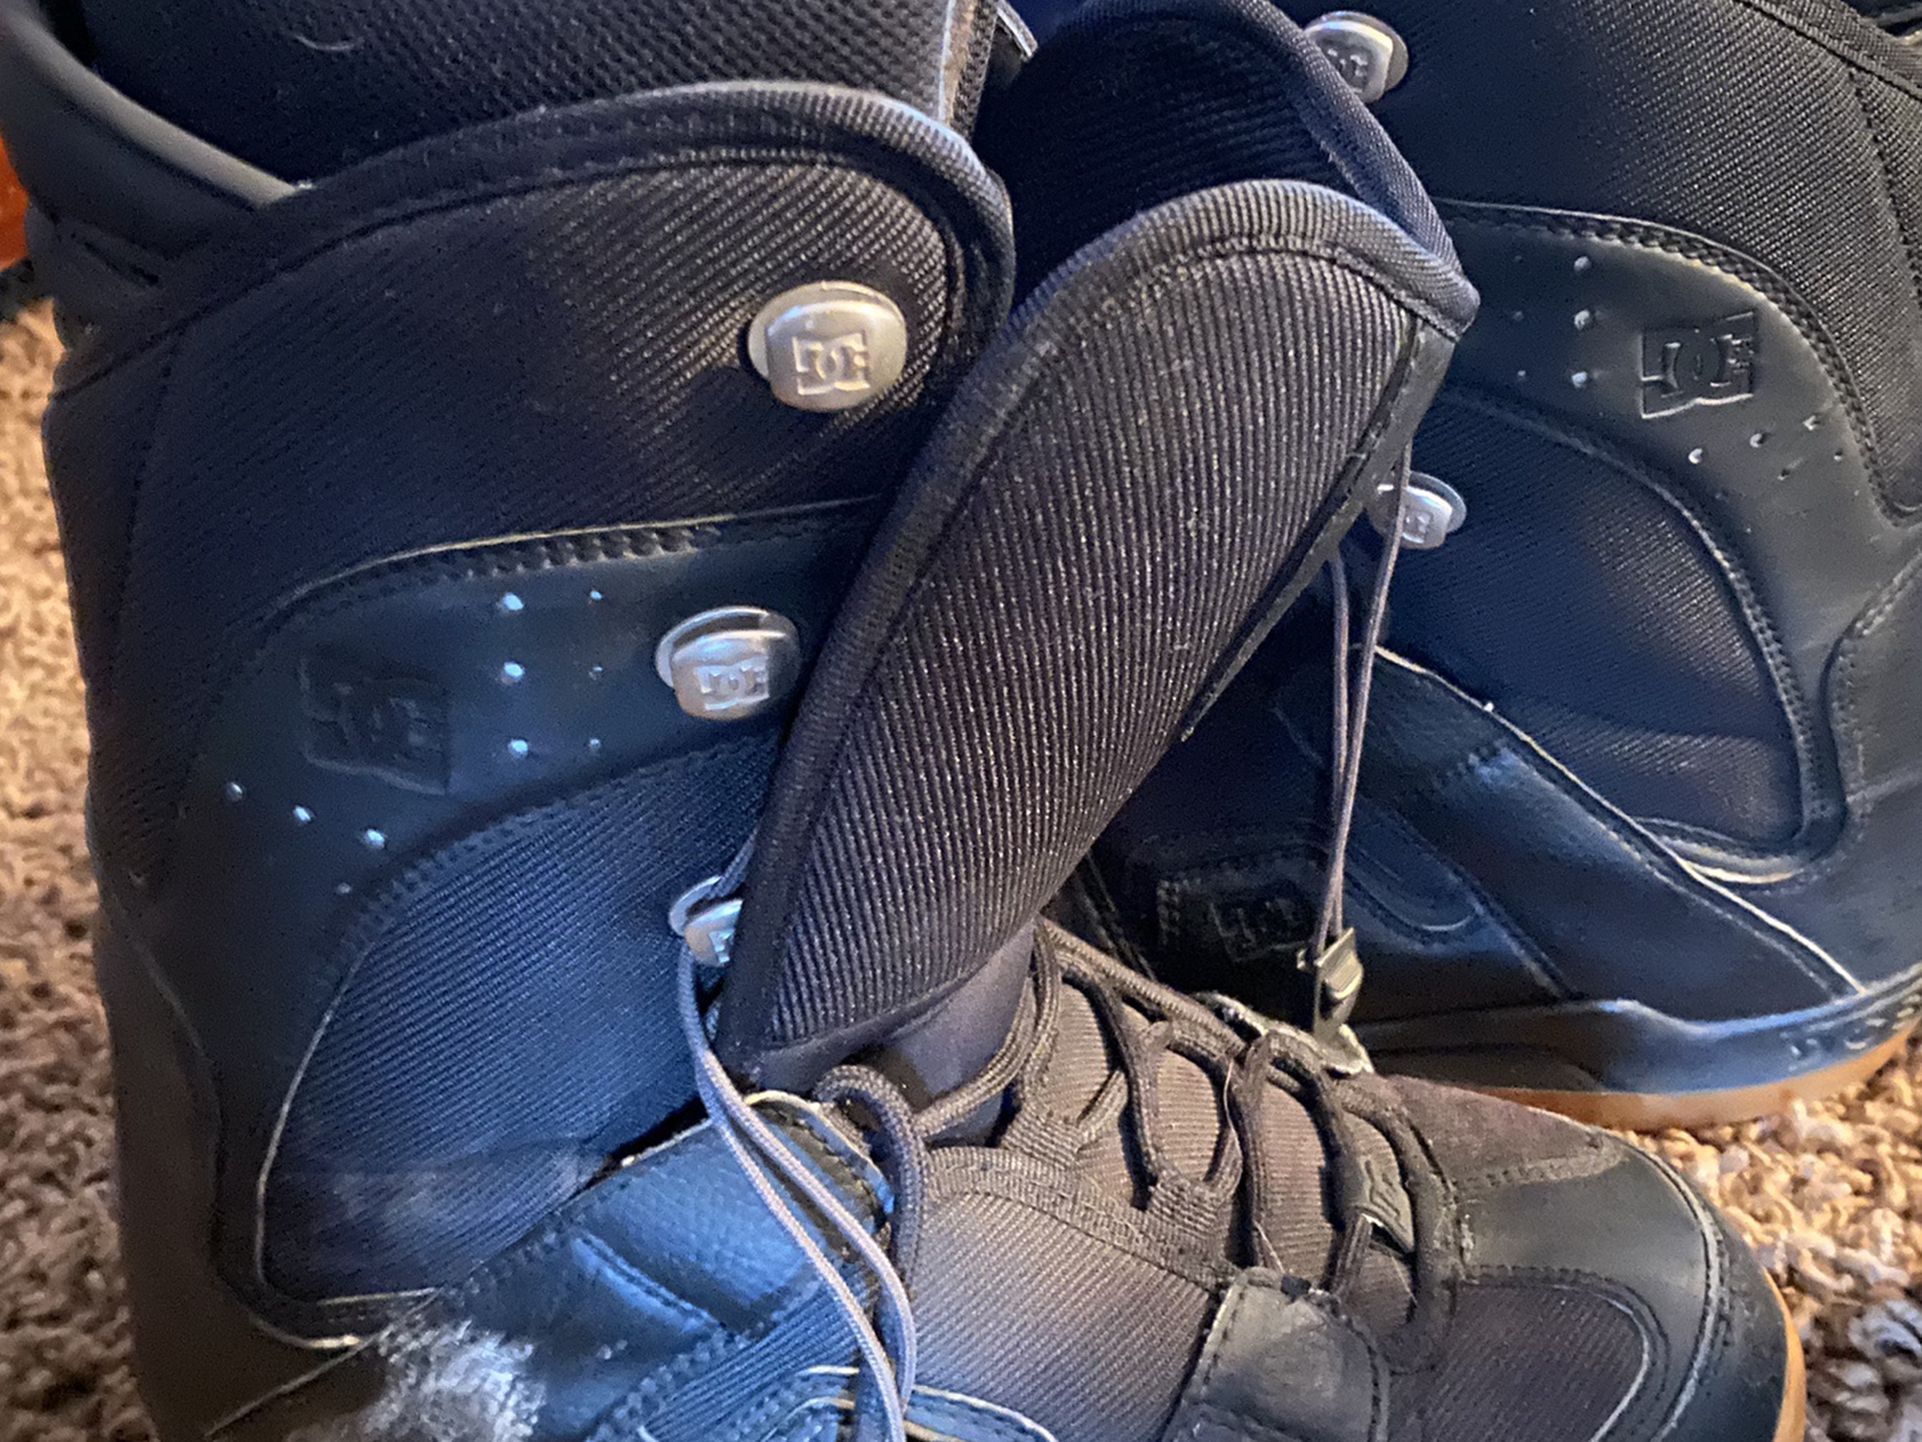 DC Snow board Boots Soze 9.5 Men’s